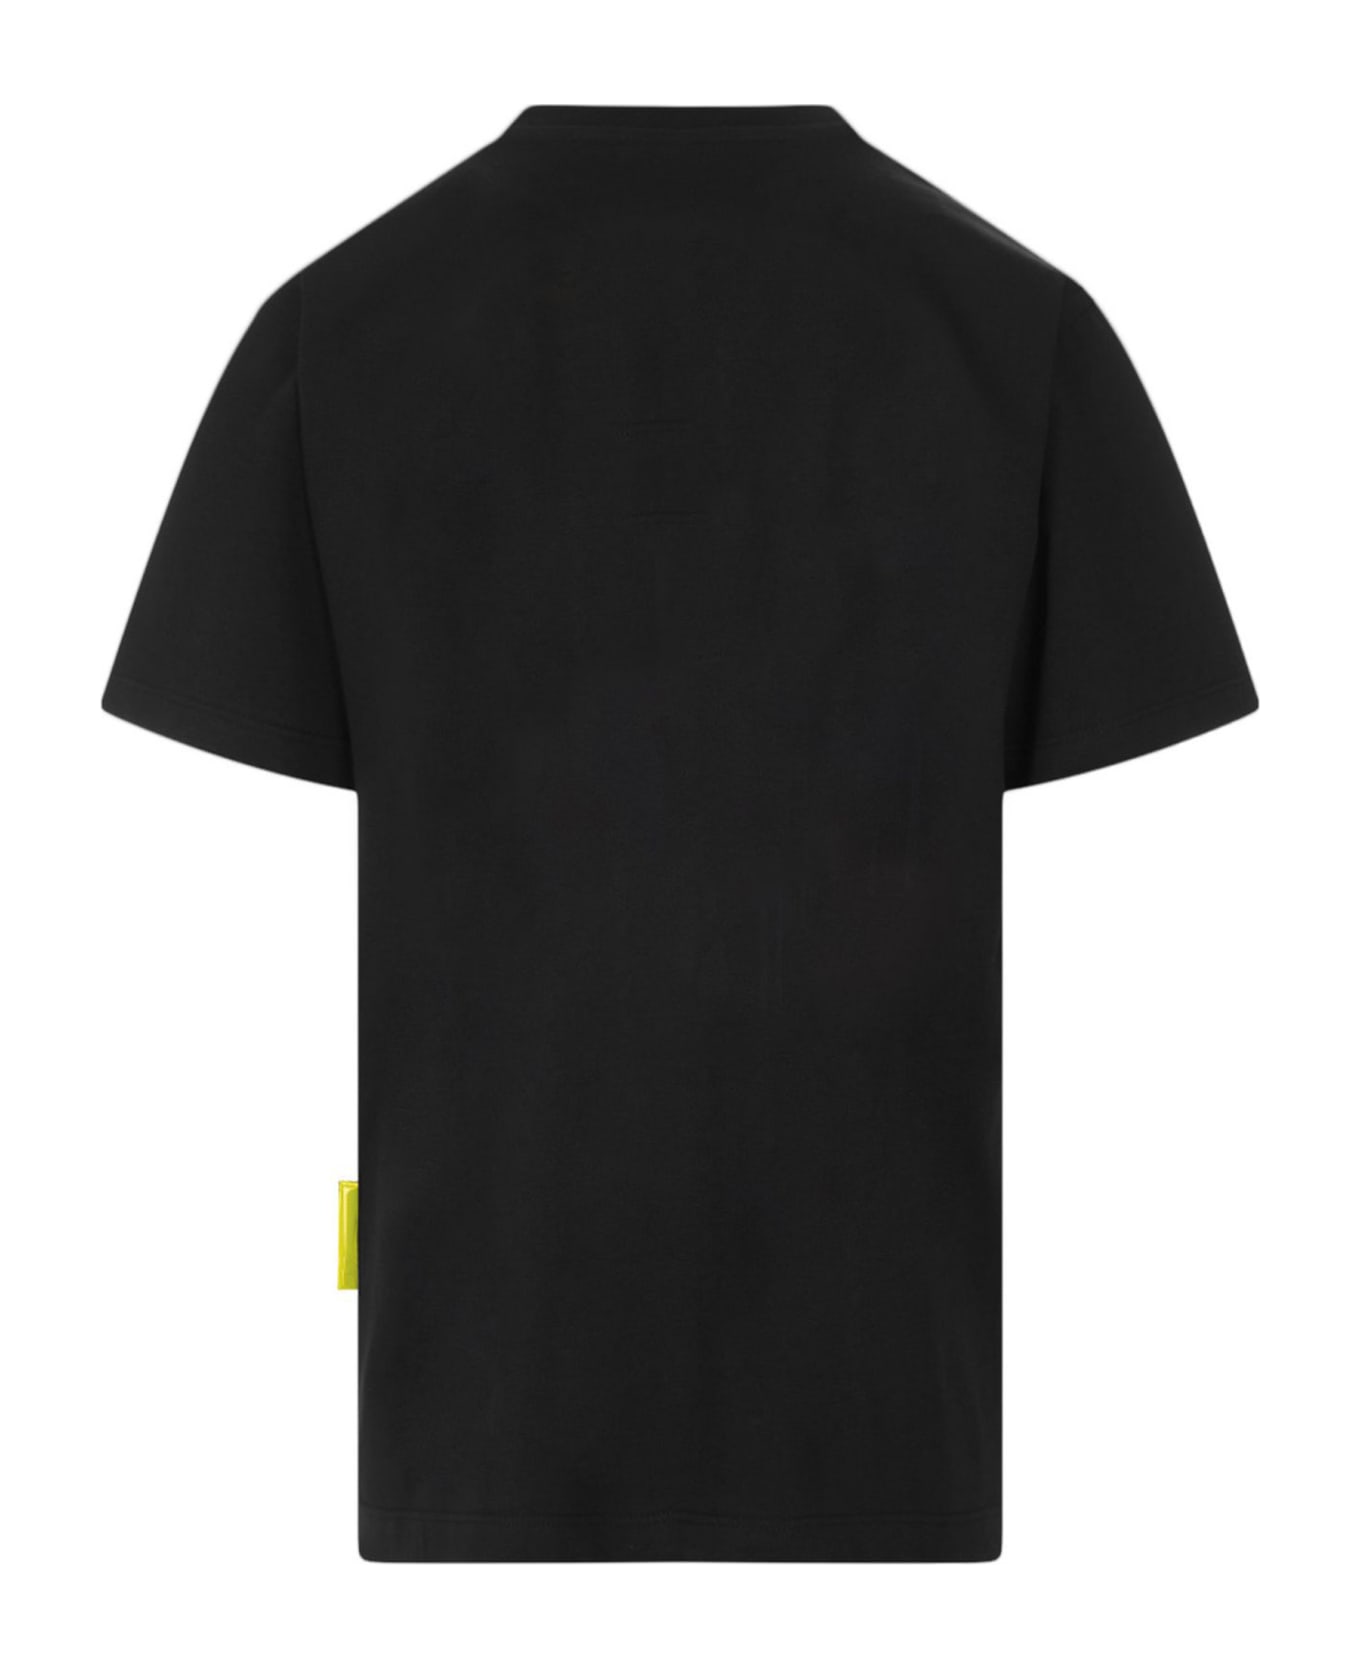 Barrow Black Cotton T-shirt - Black